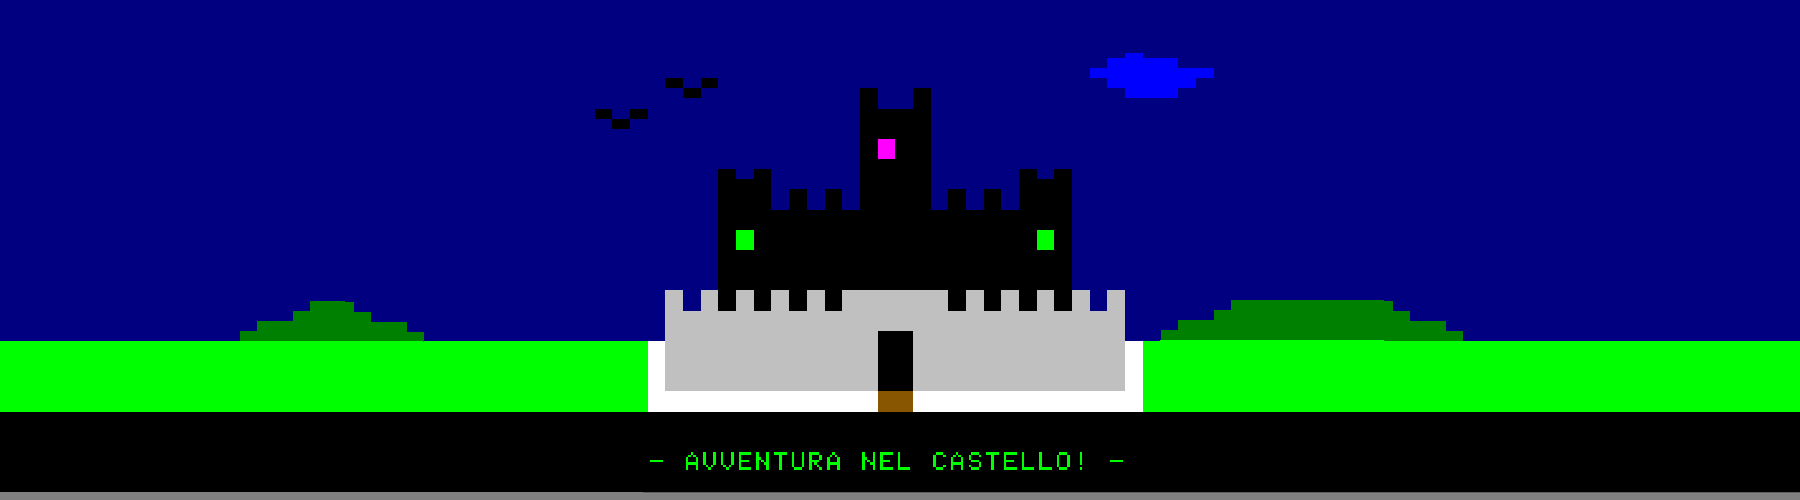 Avventura nel Castello in Javascript (Multilanguage)